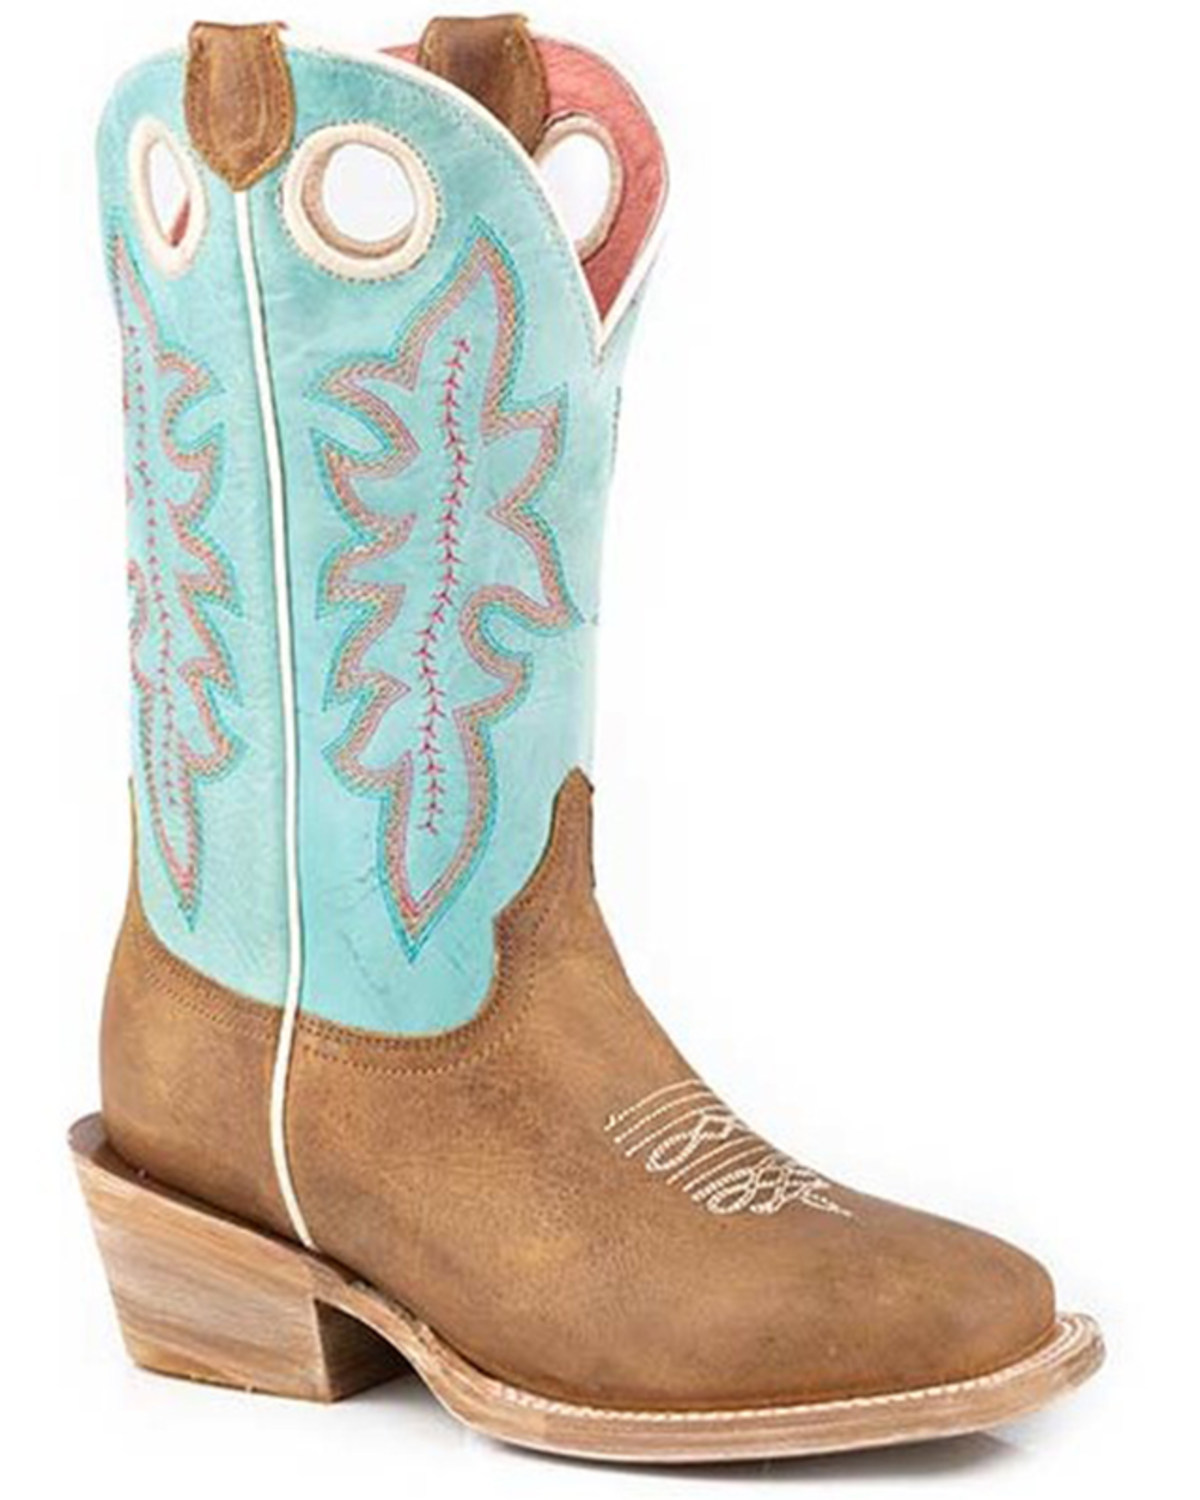 Roper Girls' Ride Em' Cowgirl Western Boots - Square Toe